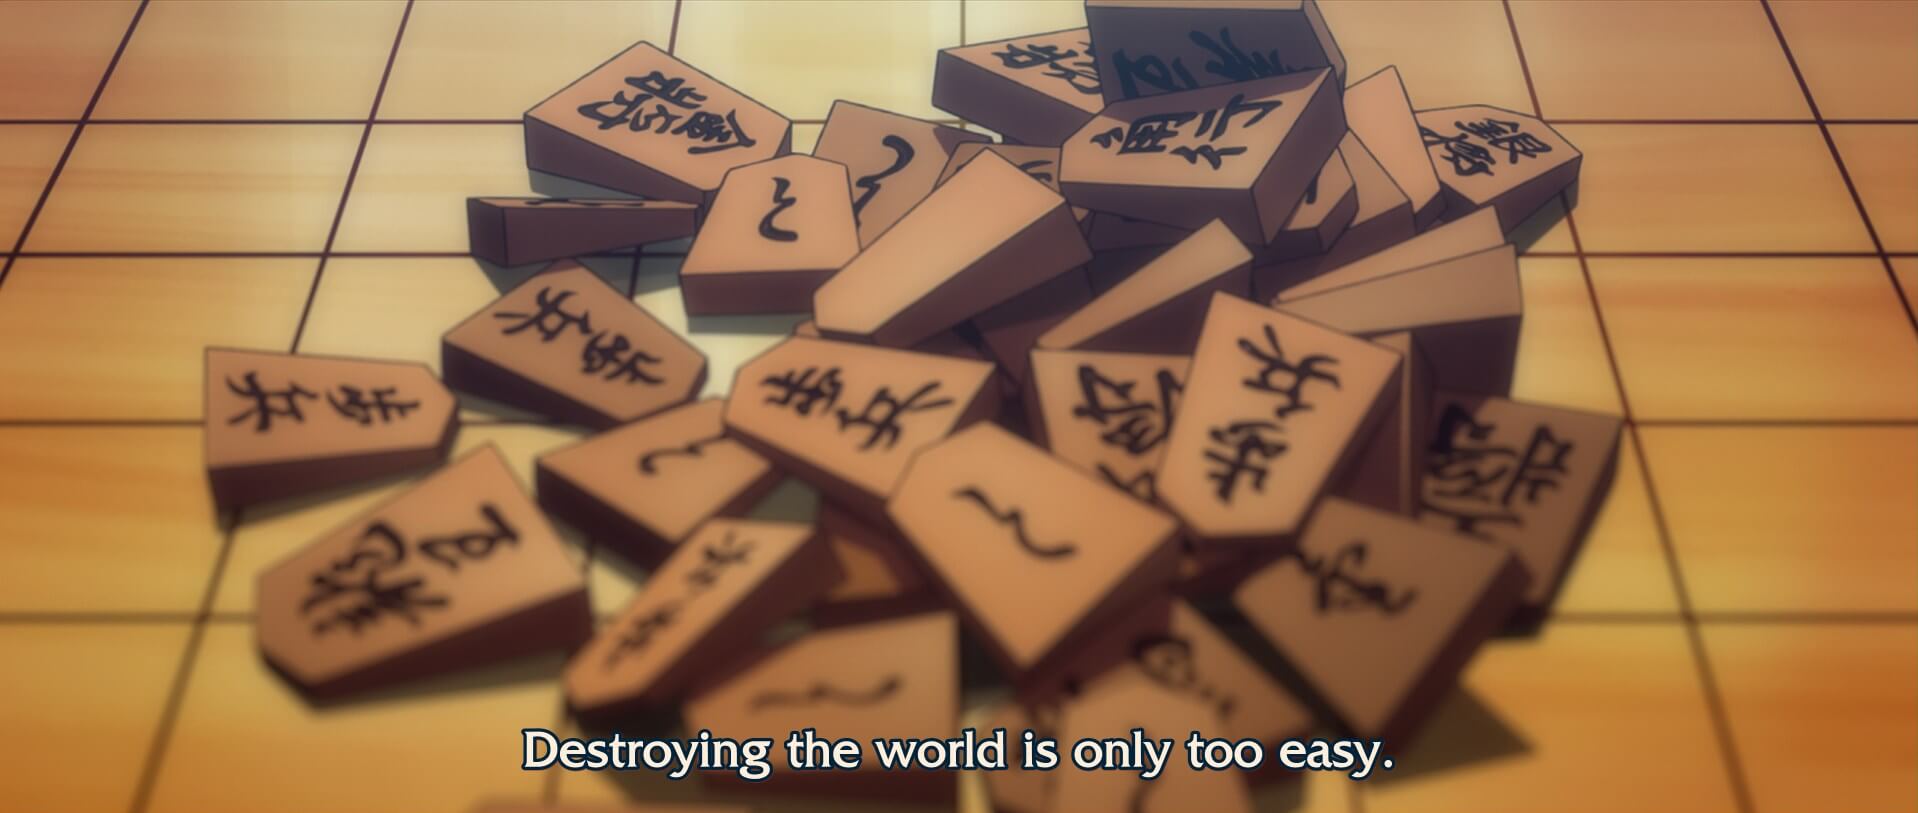 Fuyutski laments to Shinji that destroying the world is all too easy...